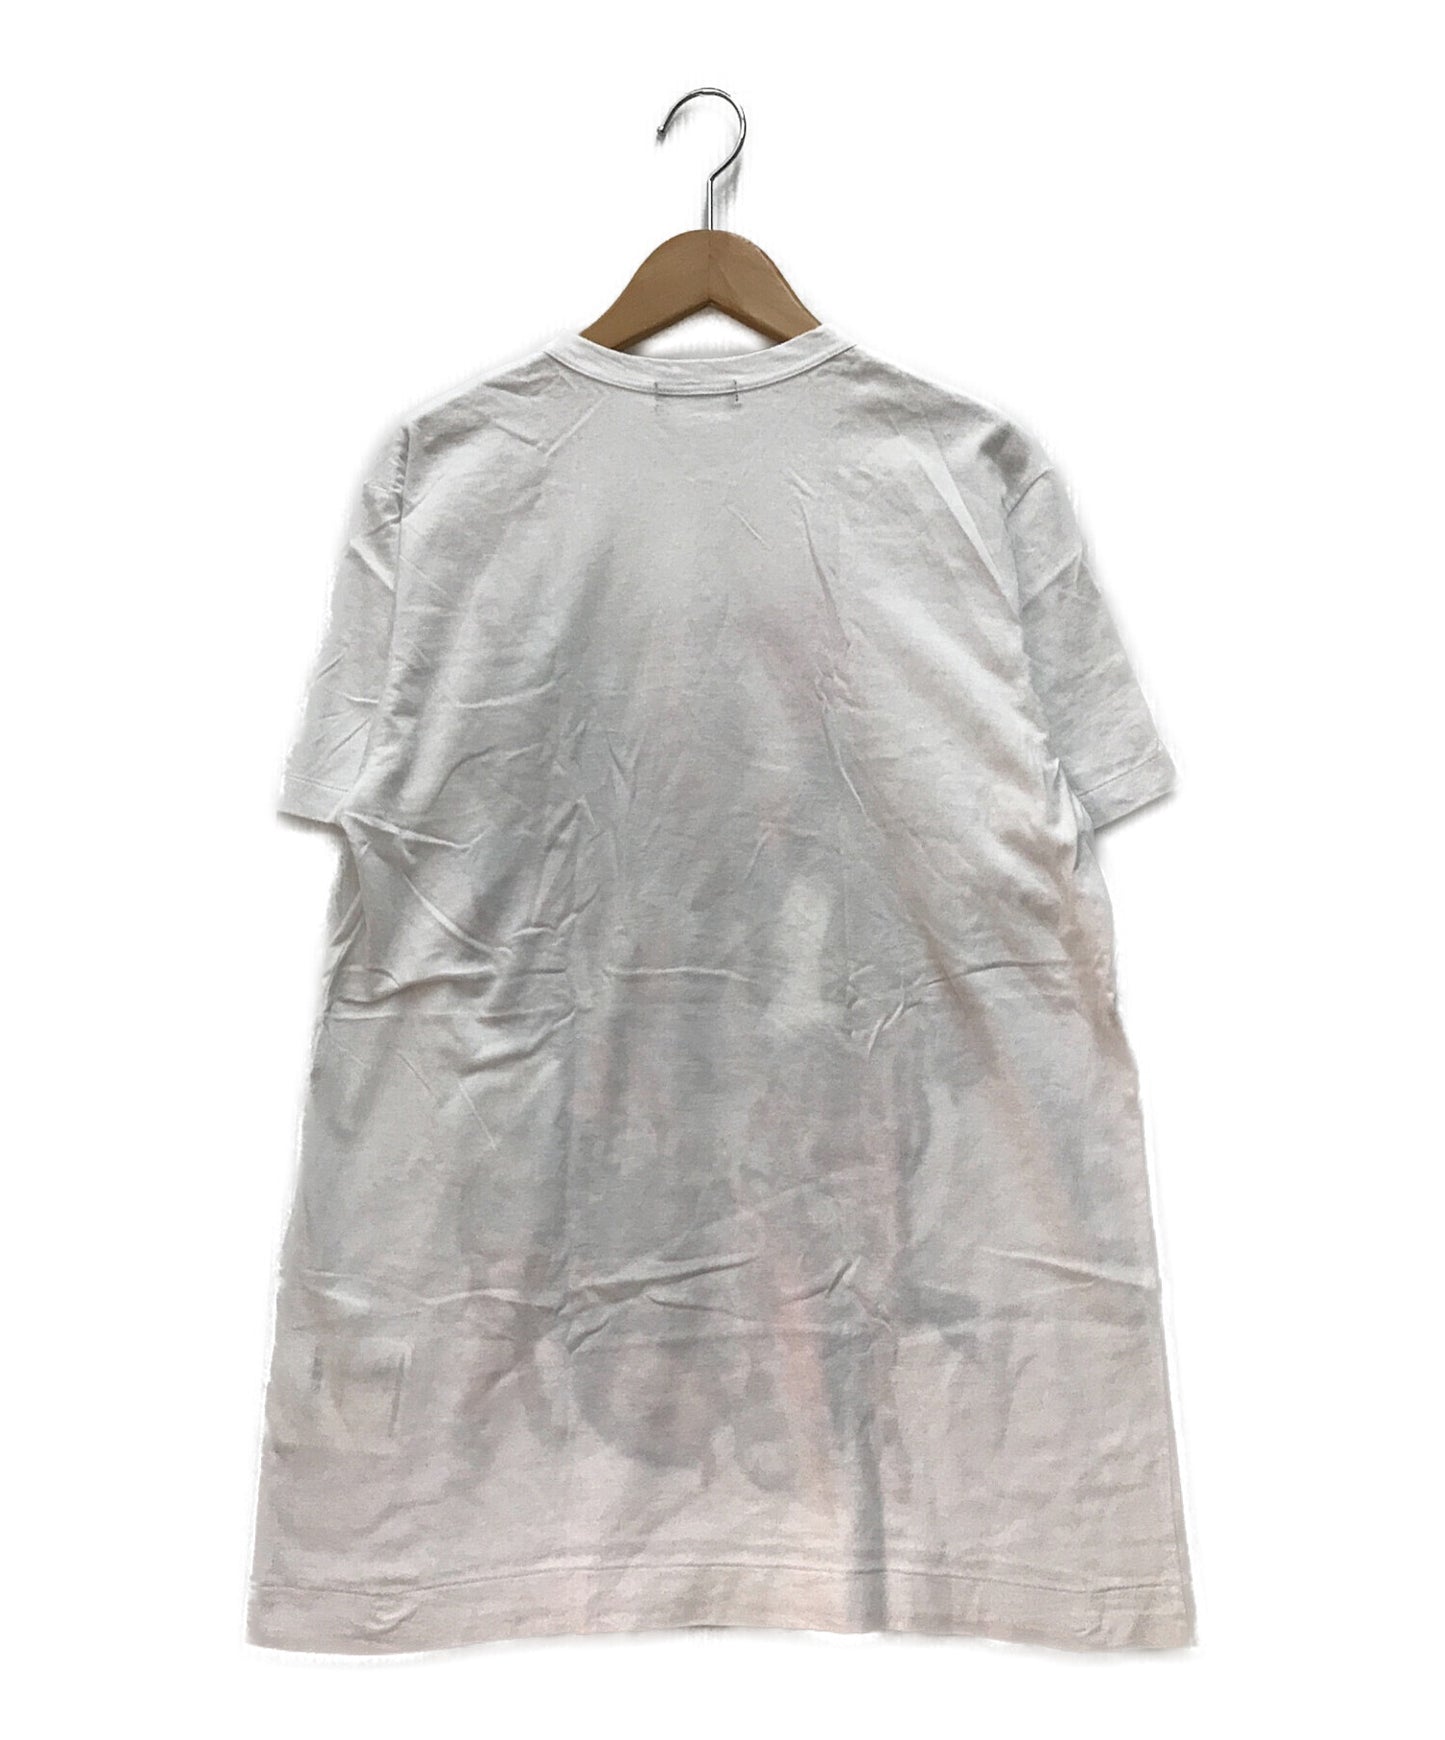 [Pre-owned] COMME des GARCONS HOMME PLUS Mona Luison Print S/S Tee / Mona Luison Printed Cotton T-Shirts